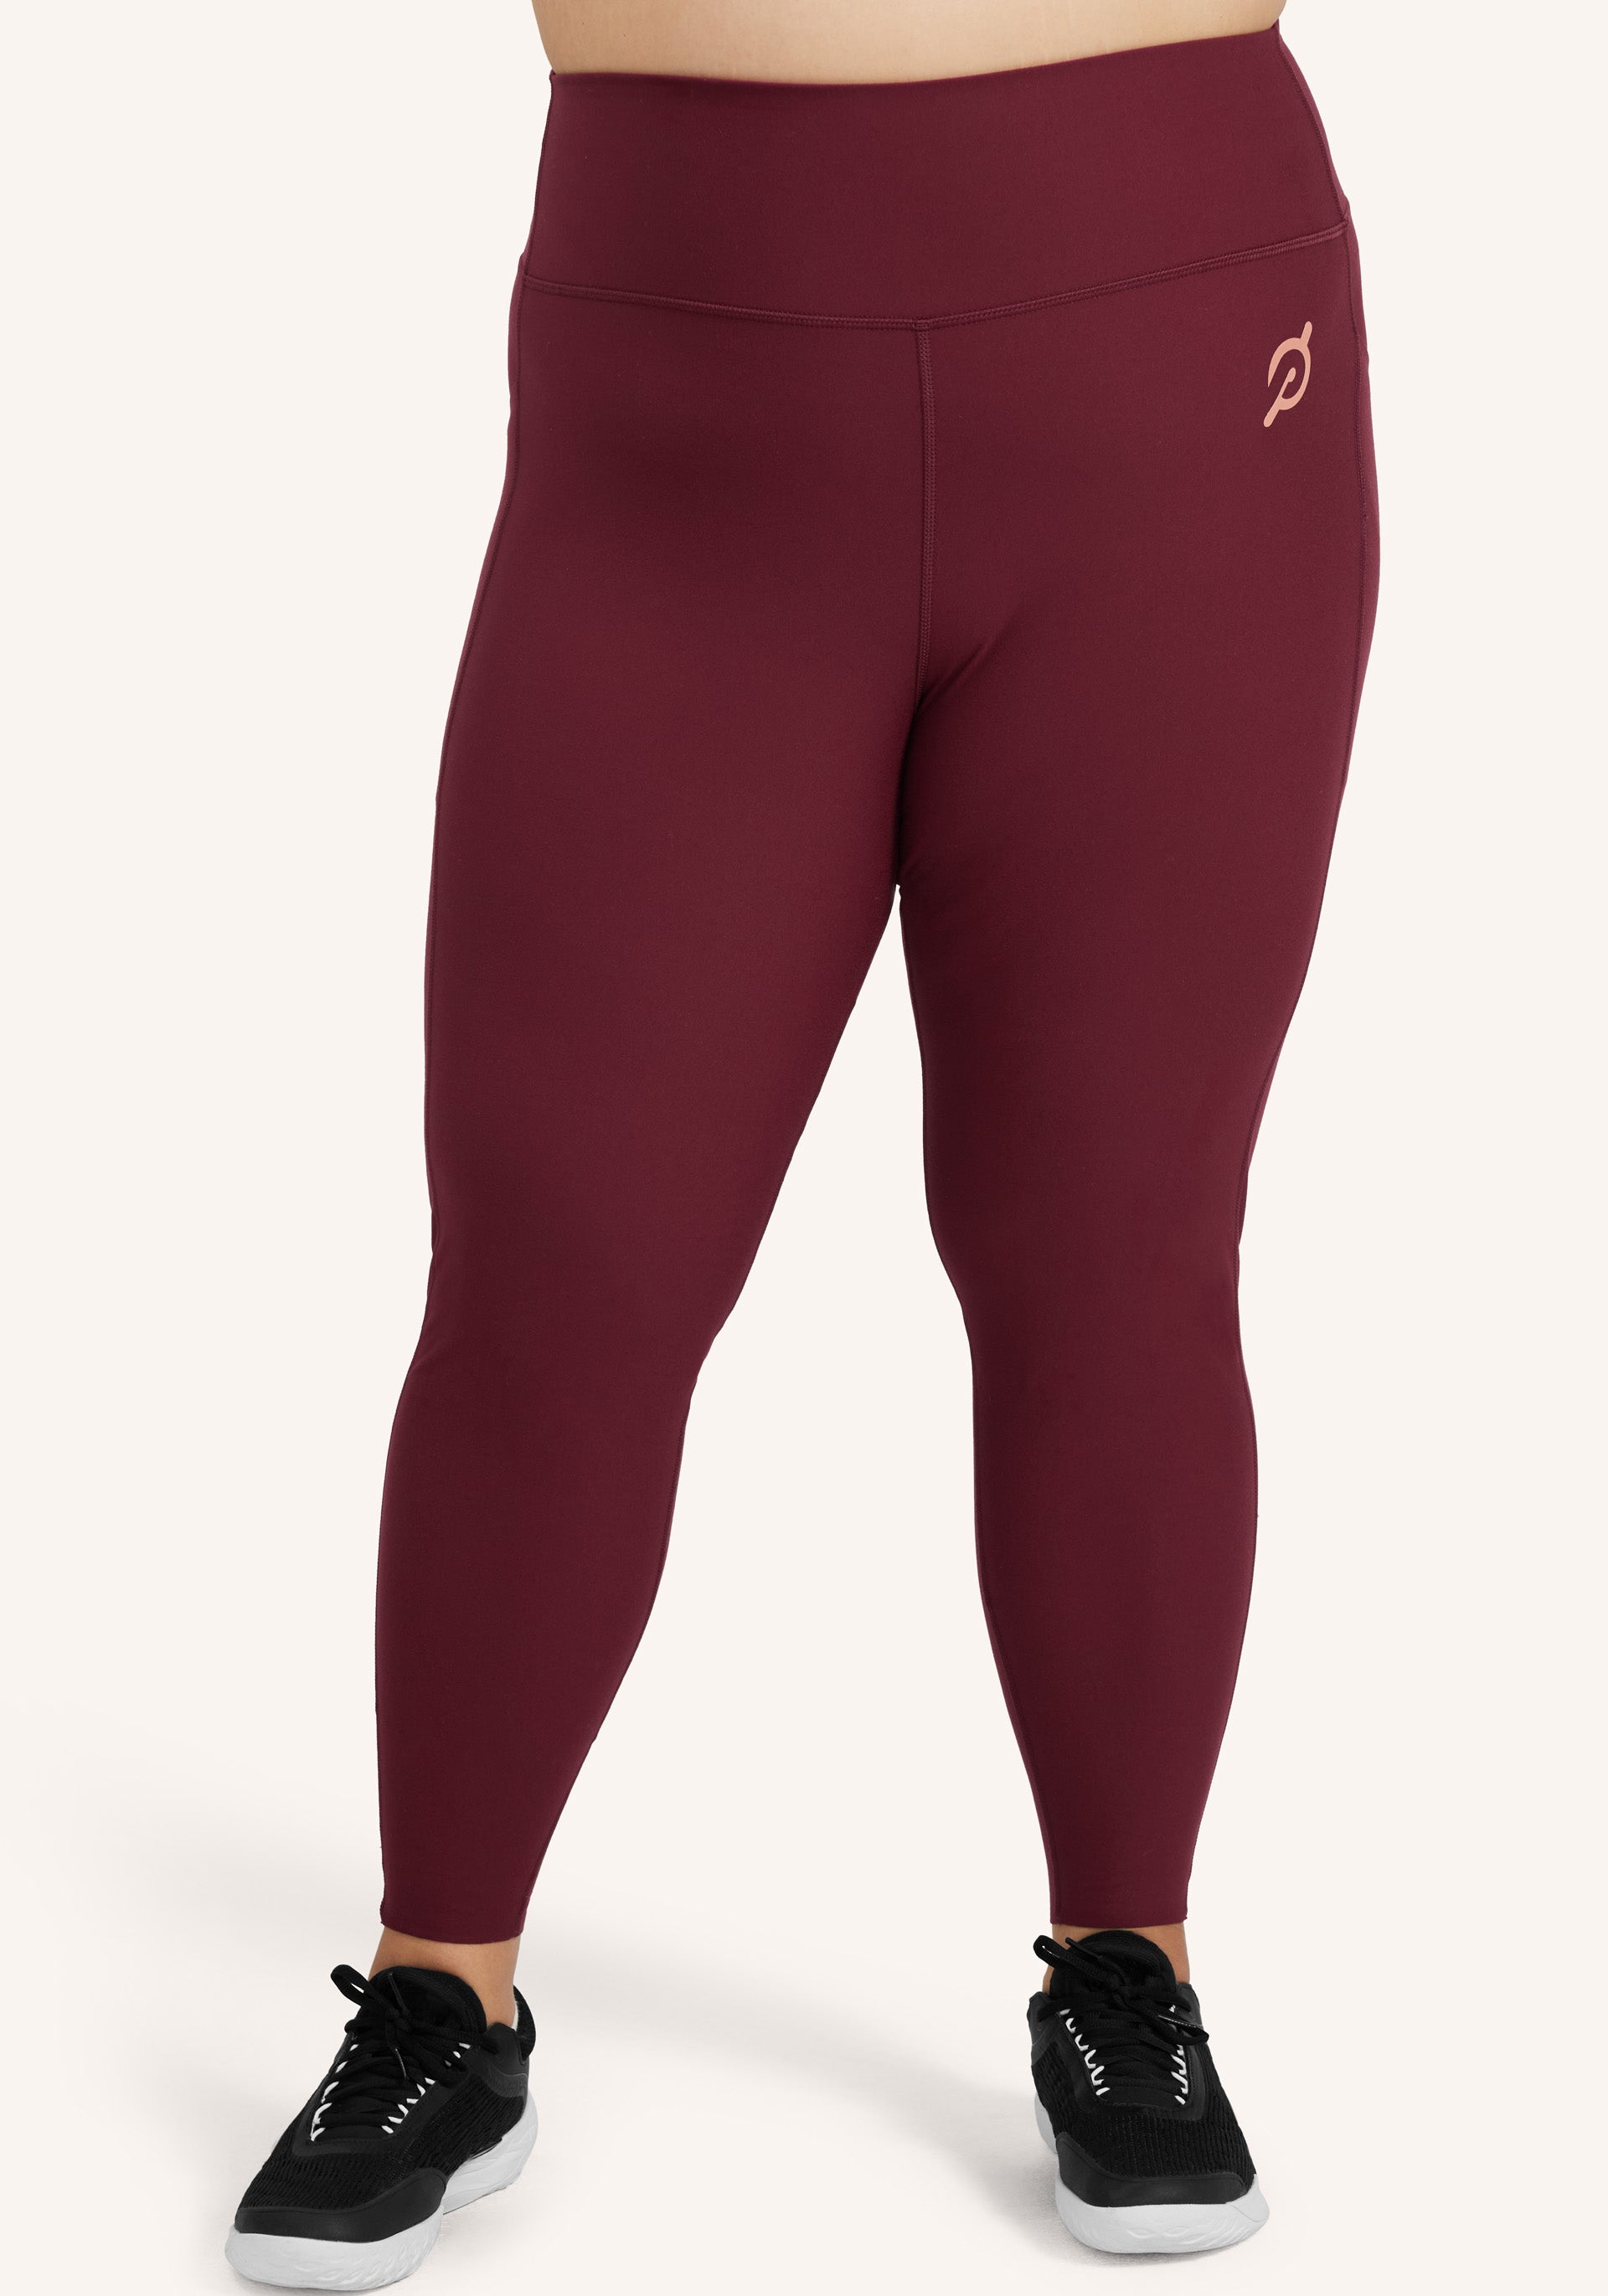 Lululemon Color block Magenta/cassis/burgundy and black leggings women size  4